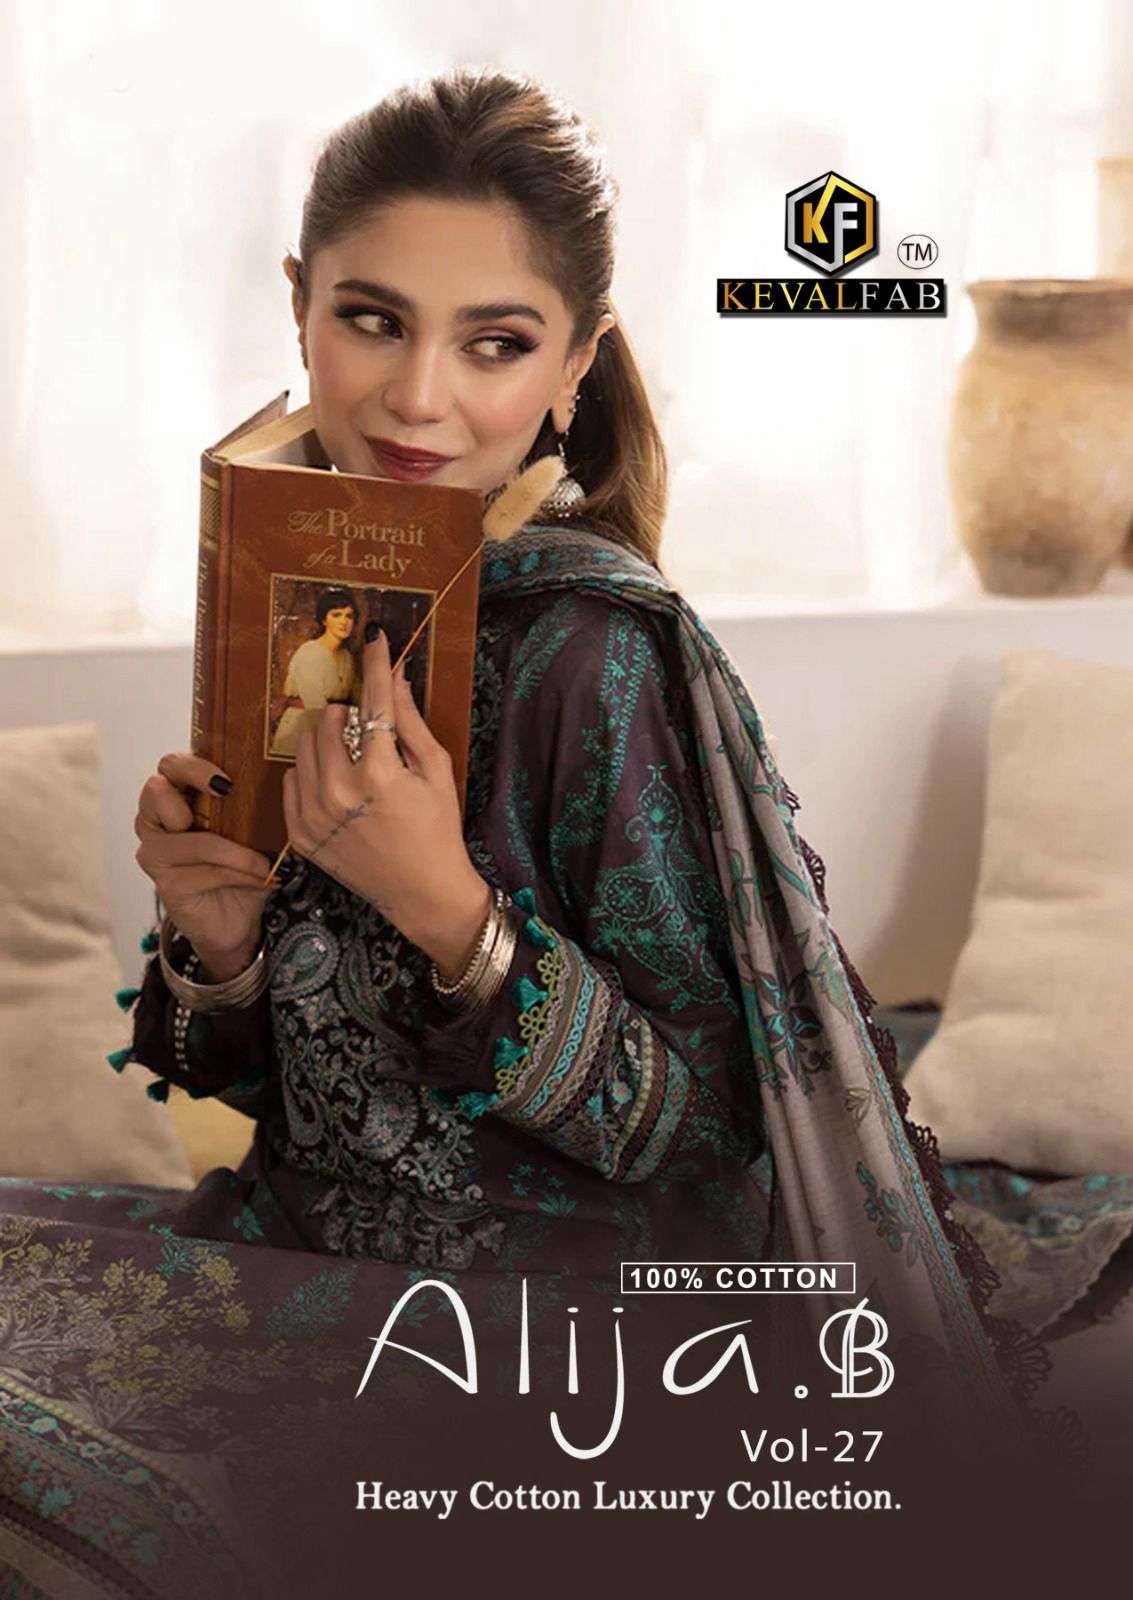 Keval Fab Alija B Vol 27 Heavy Cotton Luxury Collection Karachi Suit Suppliers